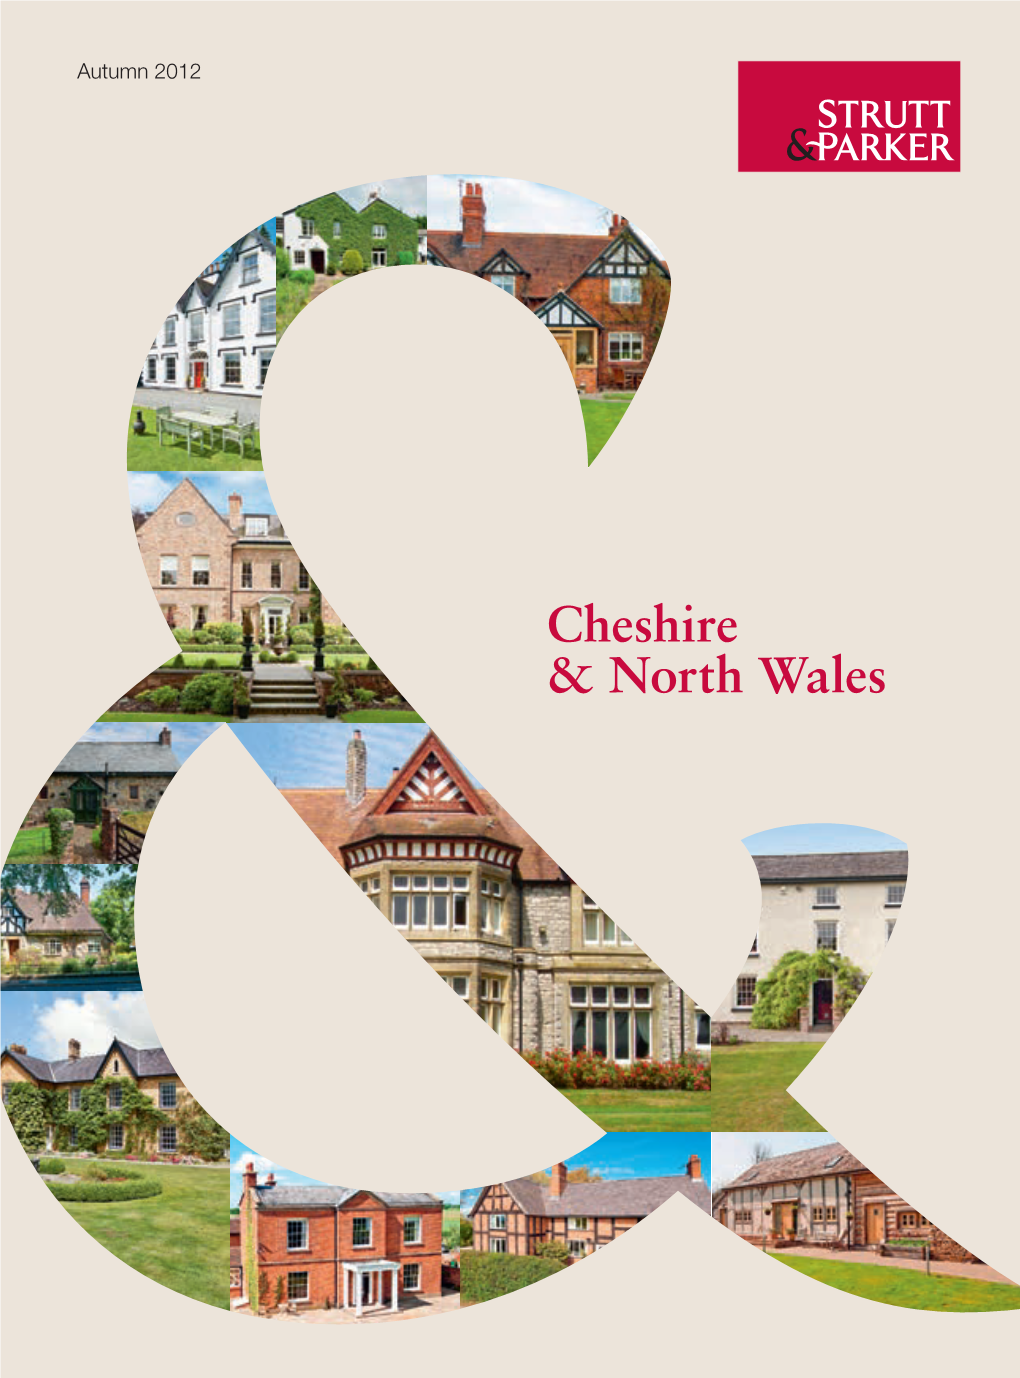 Cheshire & North Wales